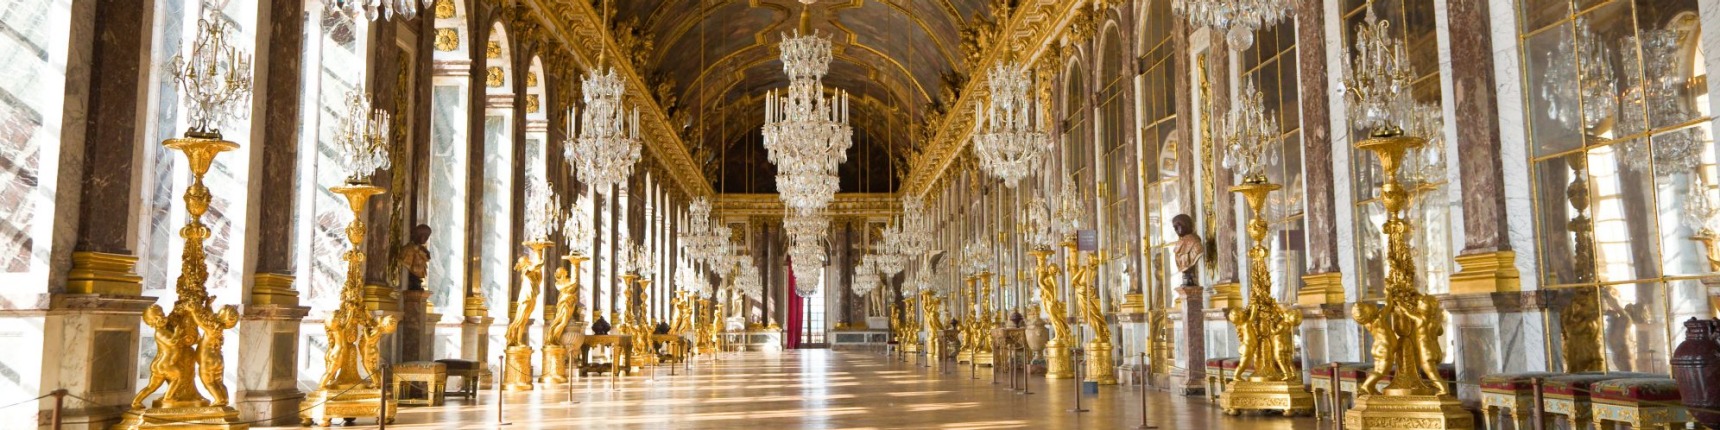 France, palace